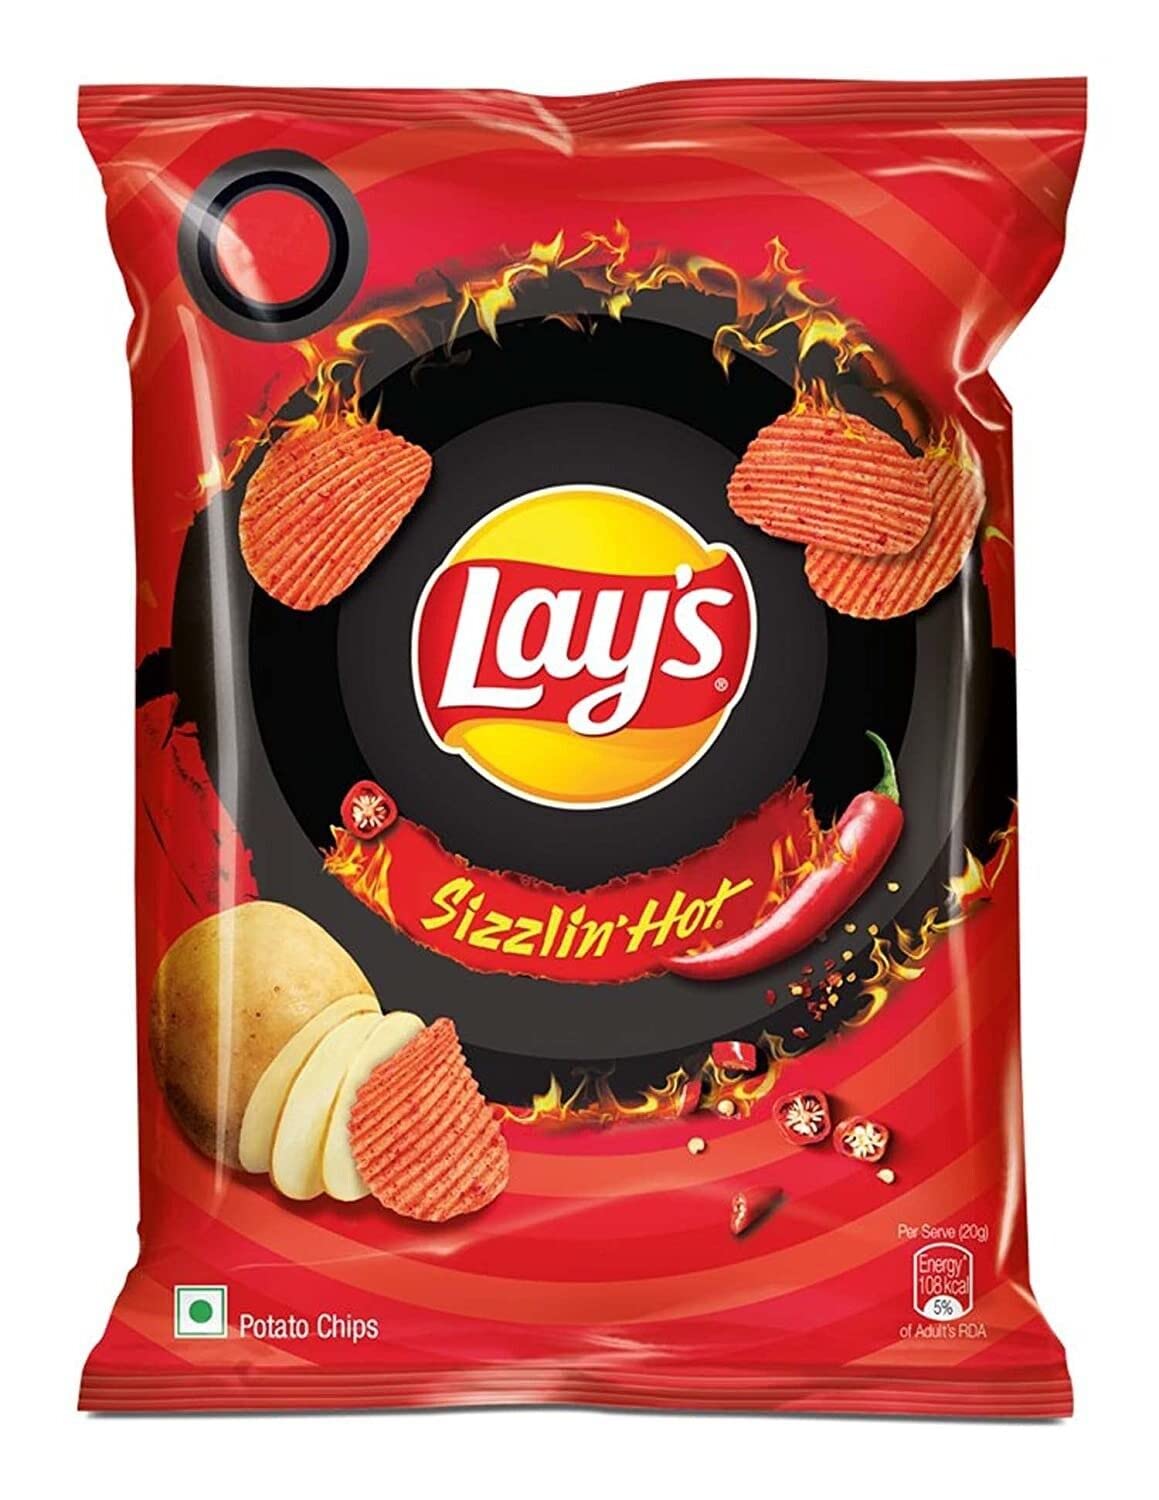 Lay's Sizzlin Hot Potato Chips, 52 g